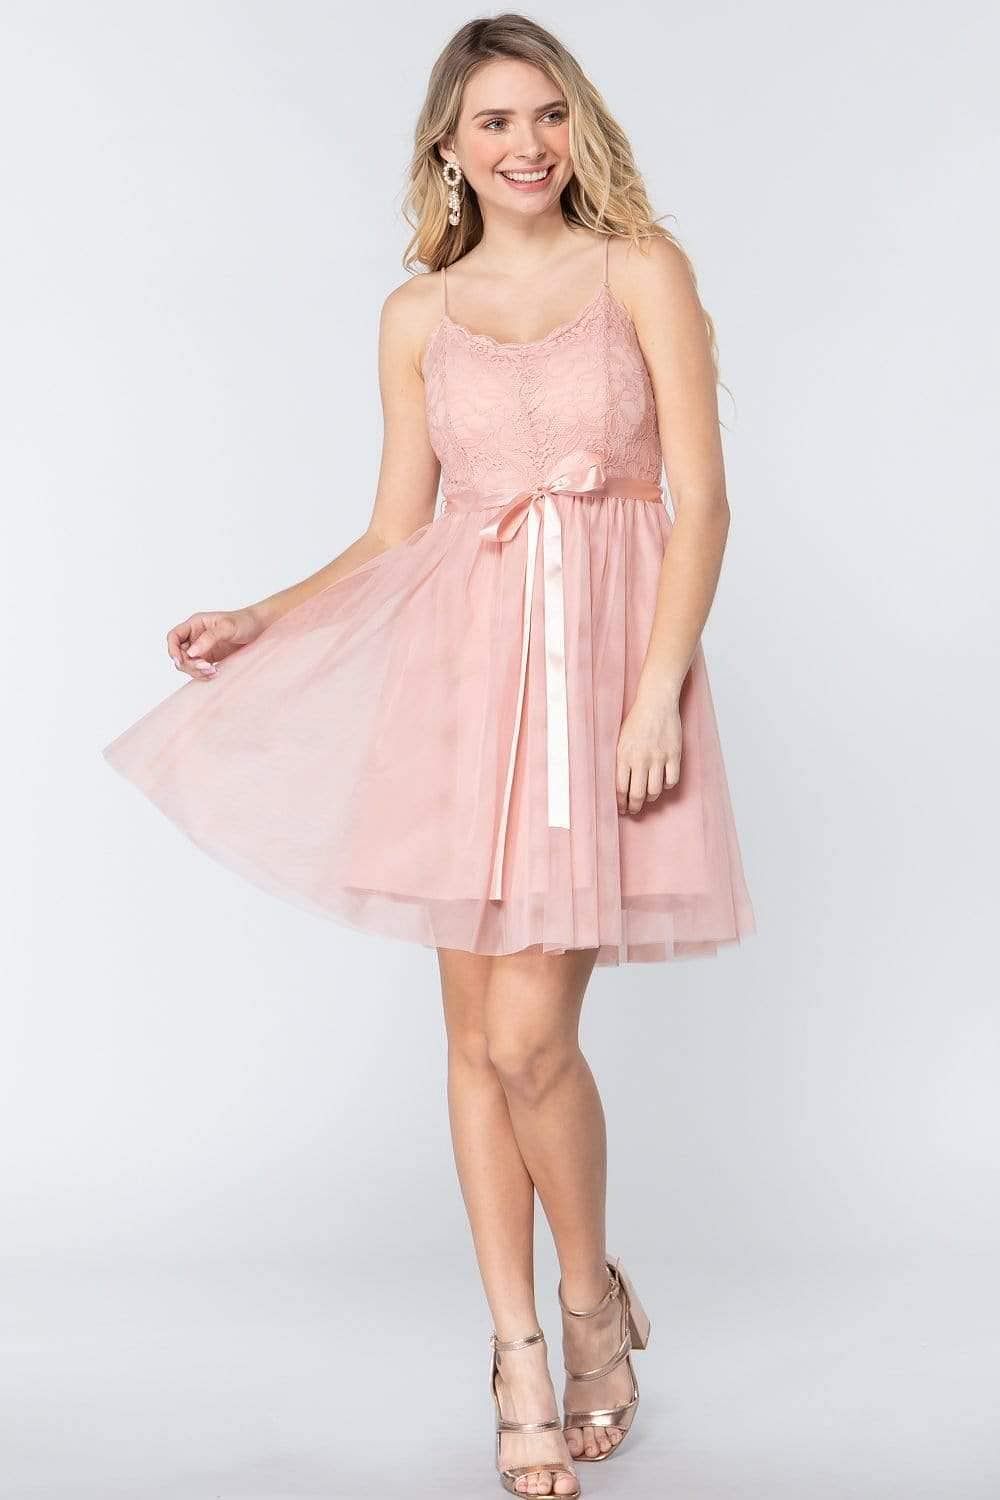 Pink Spaghetti Strap Cami Lace Mini Dress - Shopping Therapy S Apparel & Accessories